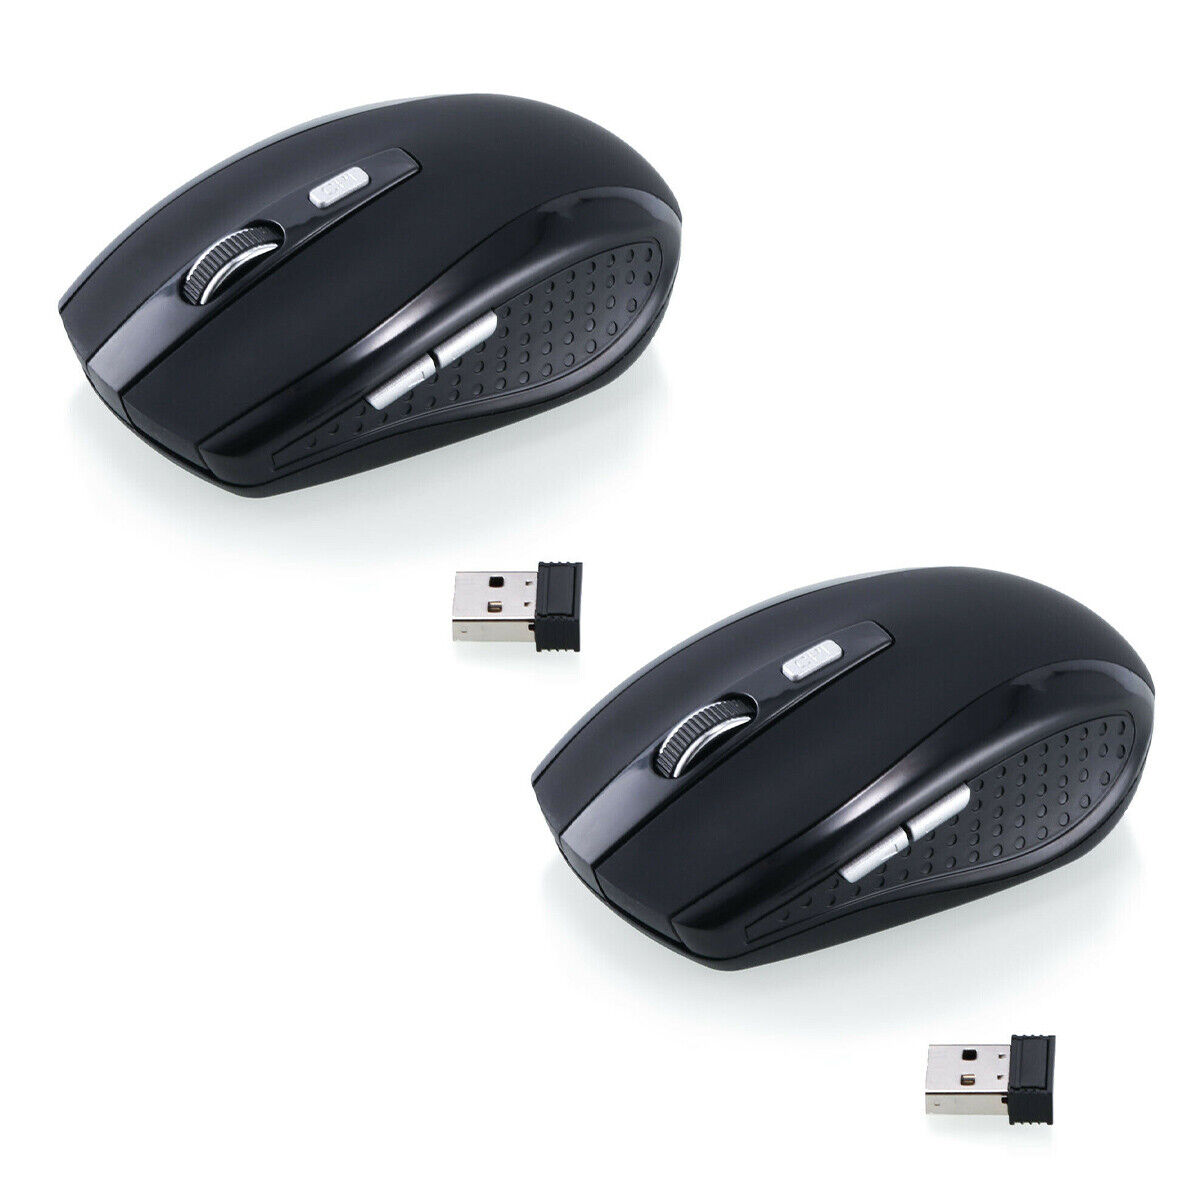 Bulk sale Lot of 2 2.4GHz Wireless Cordless Optical Mouse Mice USB PC Laptop